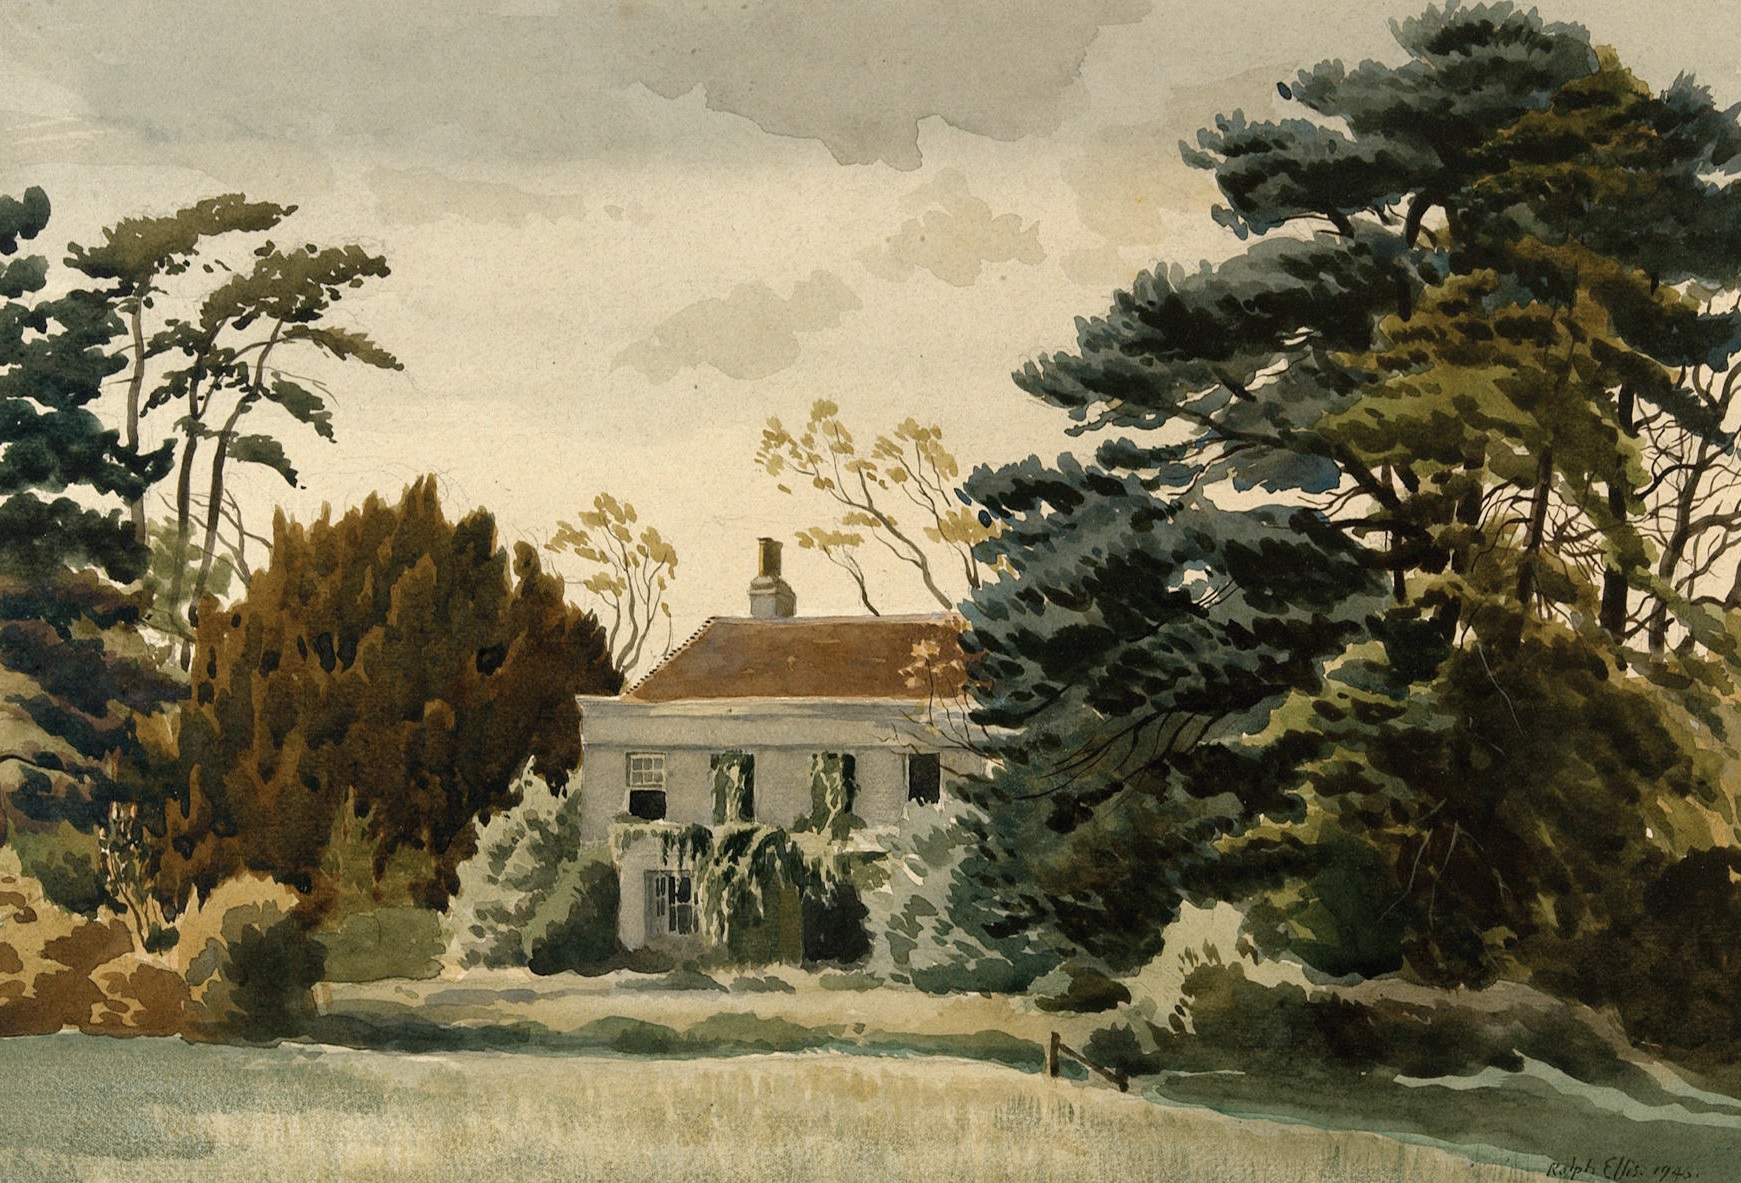 Binsted House by Ralph Ellis 1946